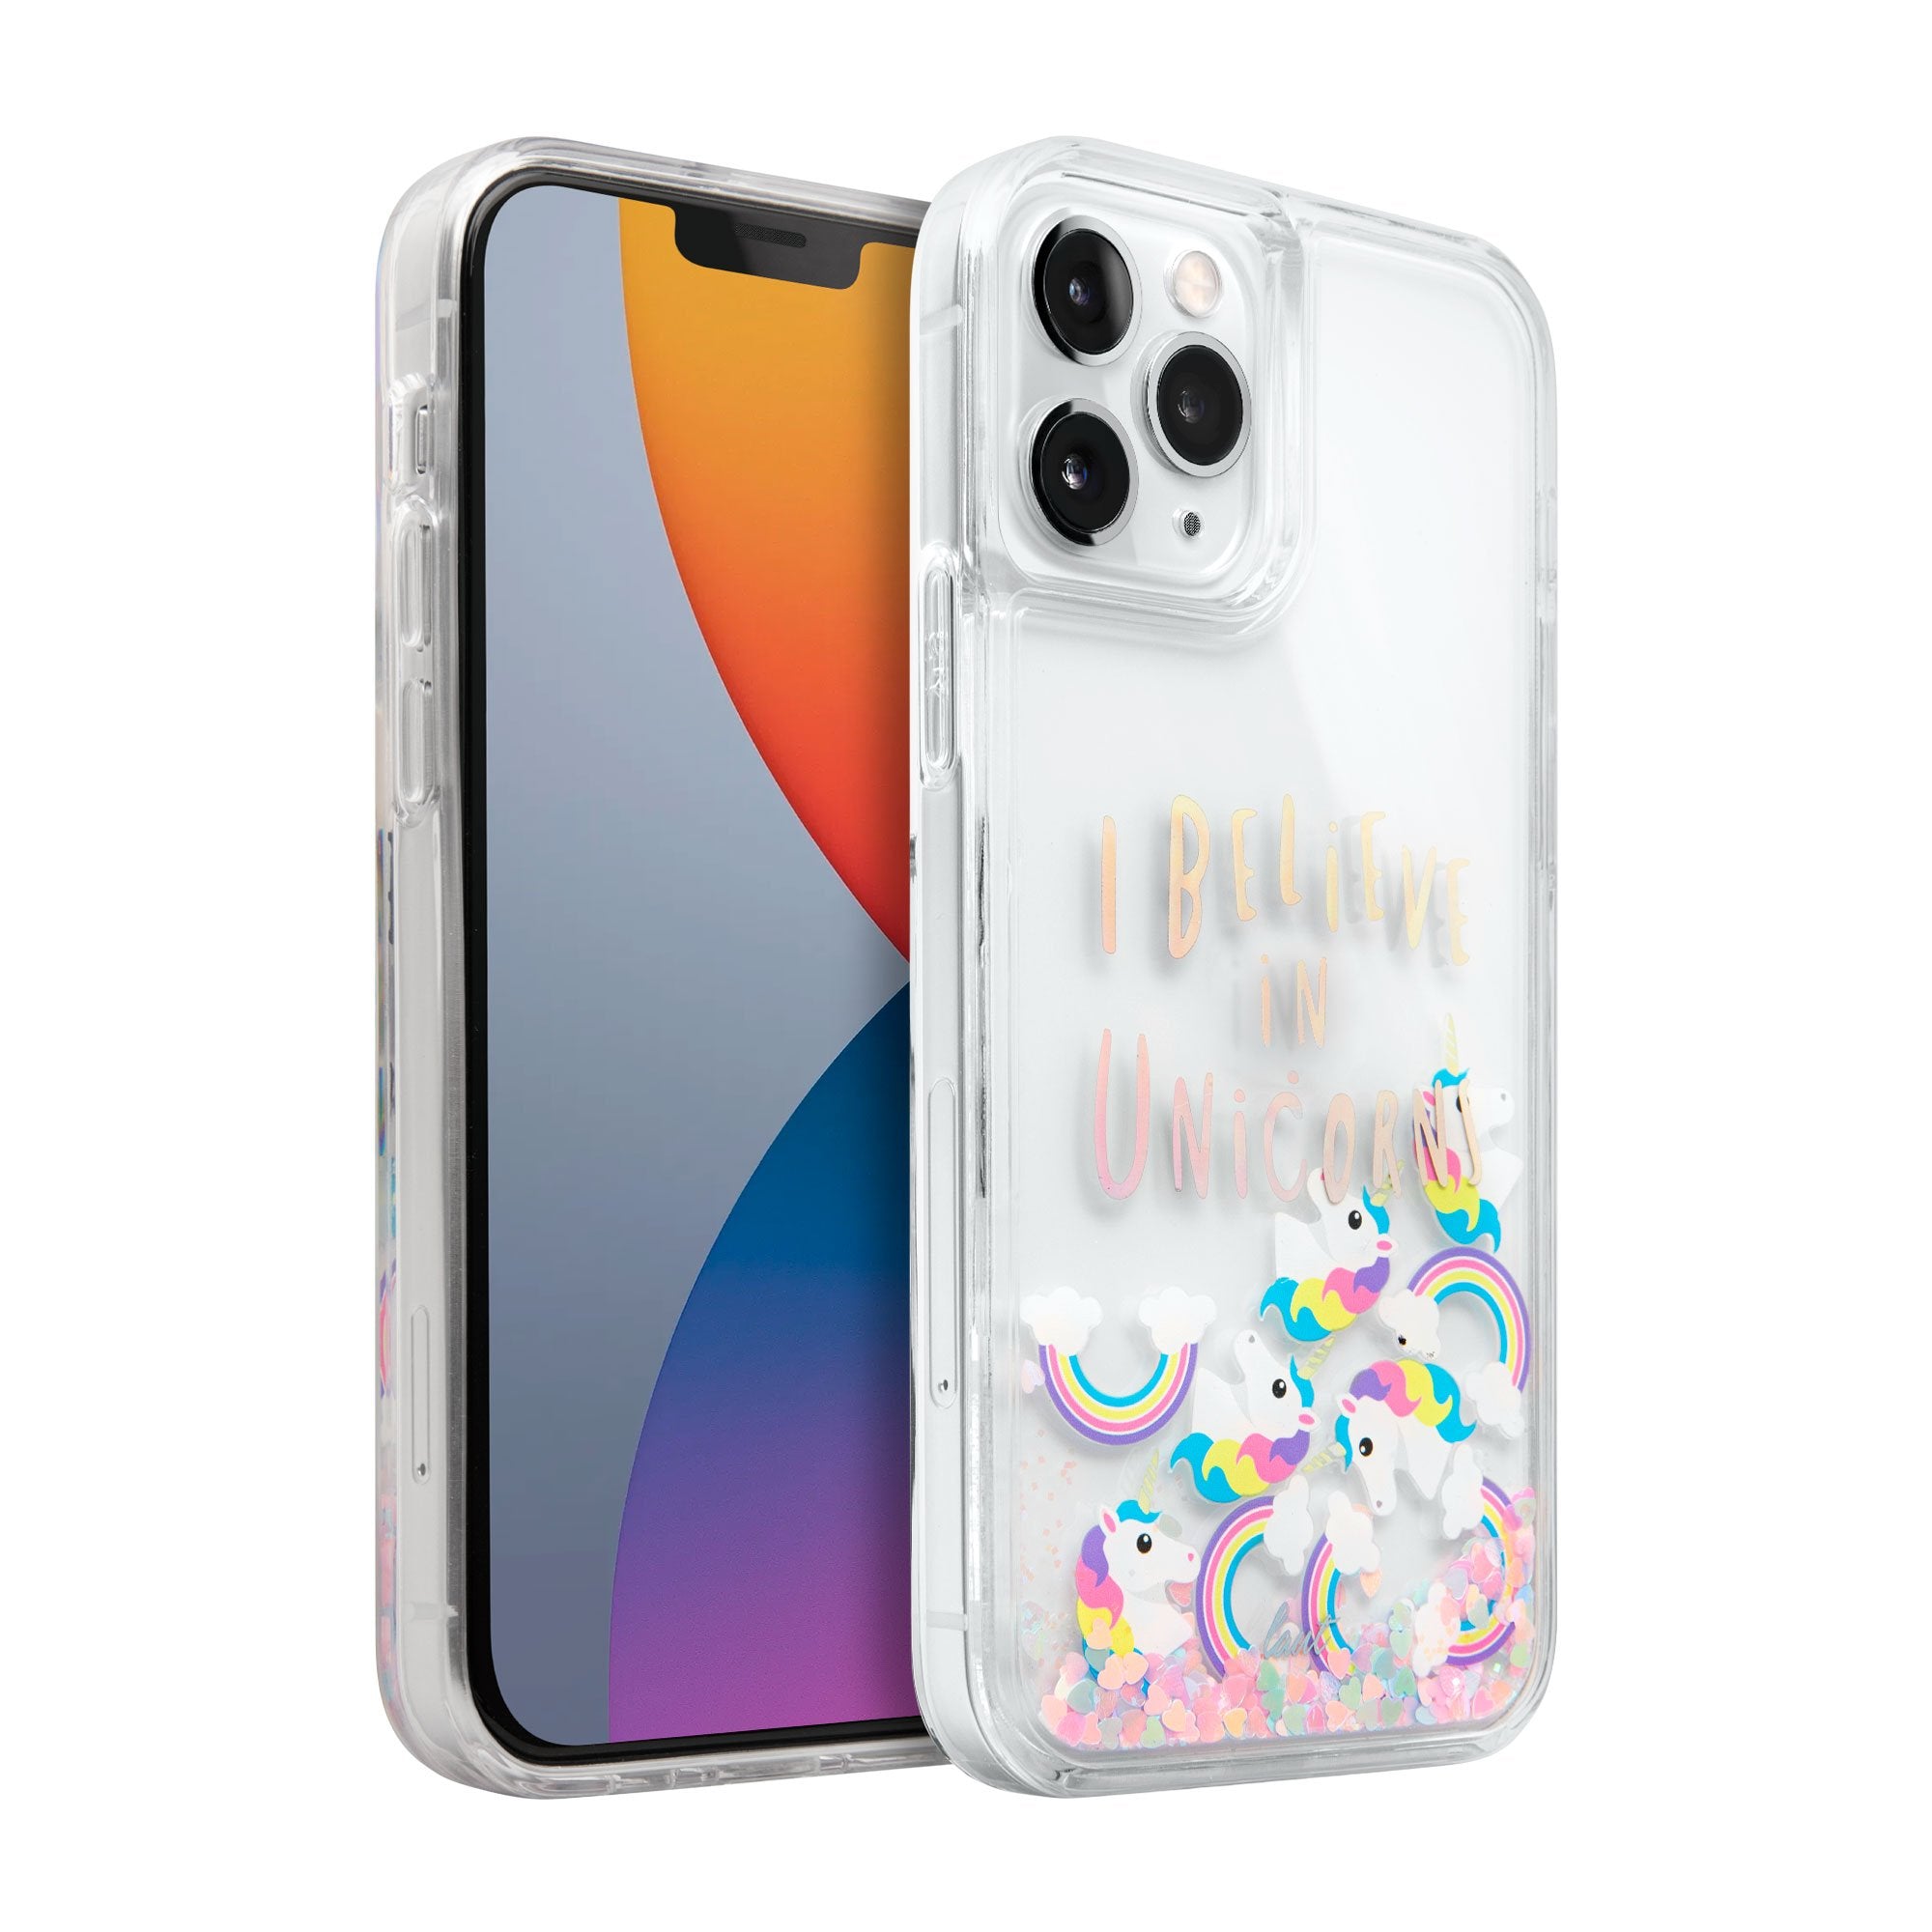 UNICORN Liquid Glitter case for iPhone 12 series